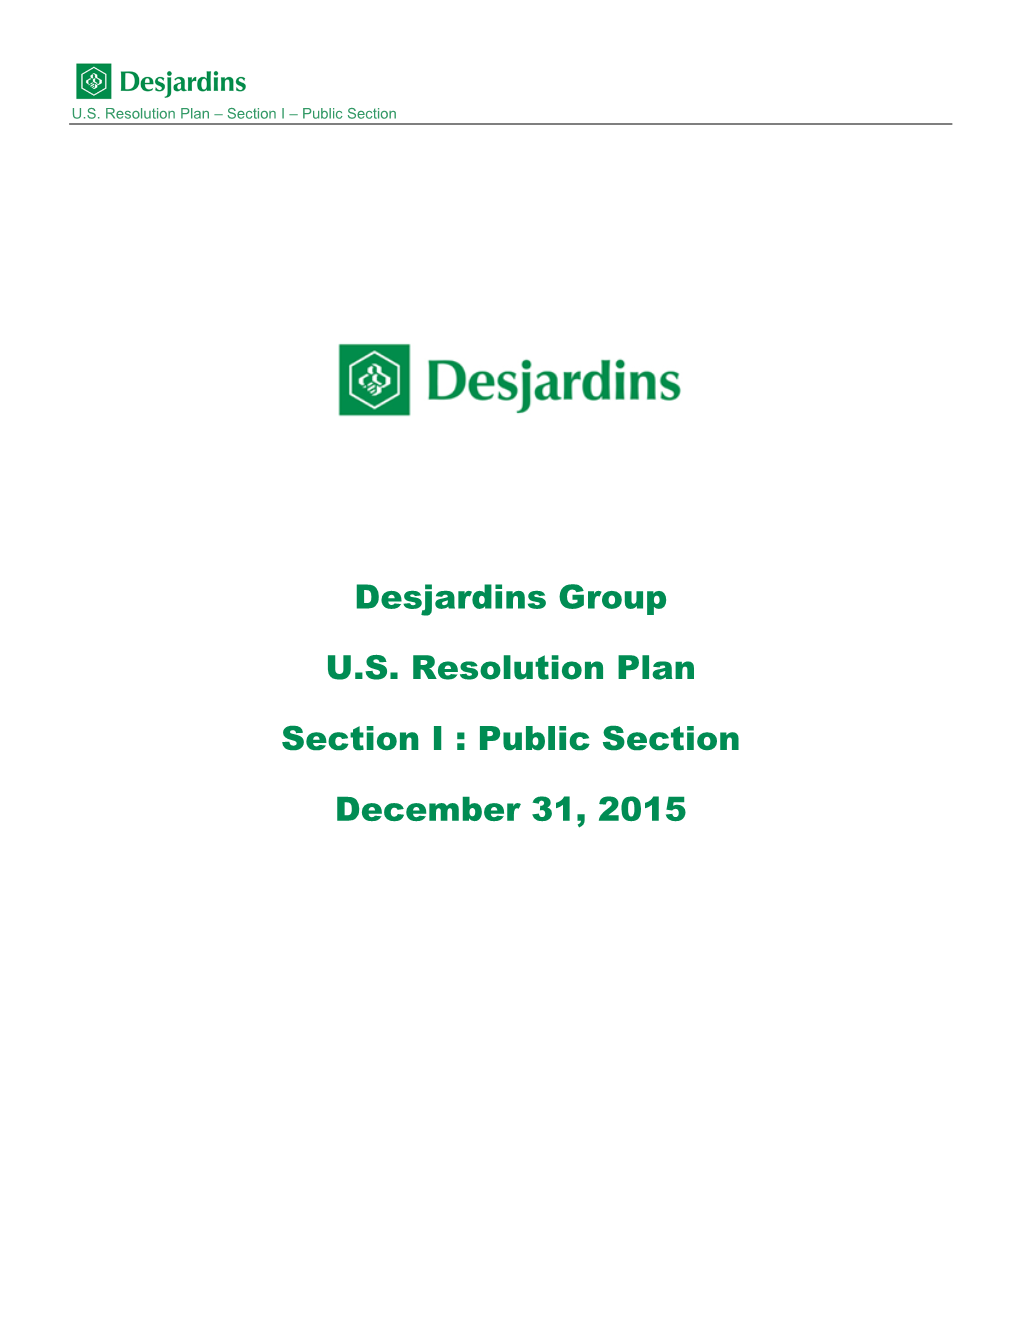 Desjardins Group U.S. Resolution Plan Section I : Public Section December 31, 2015